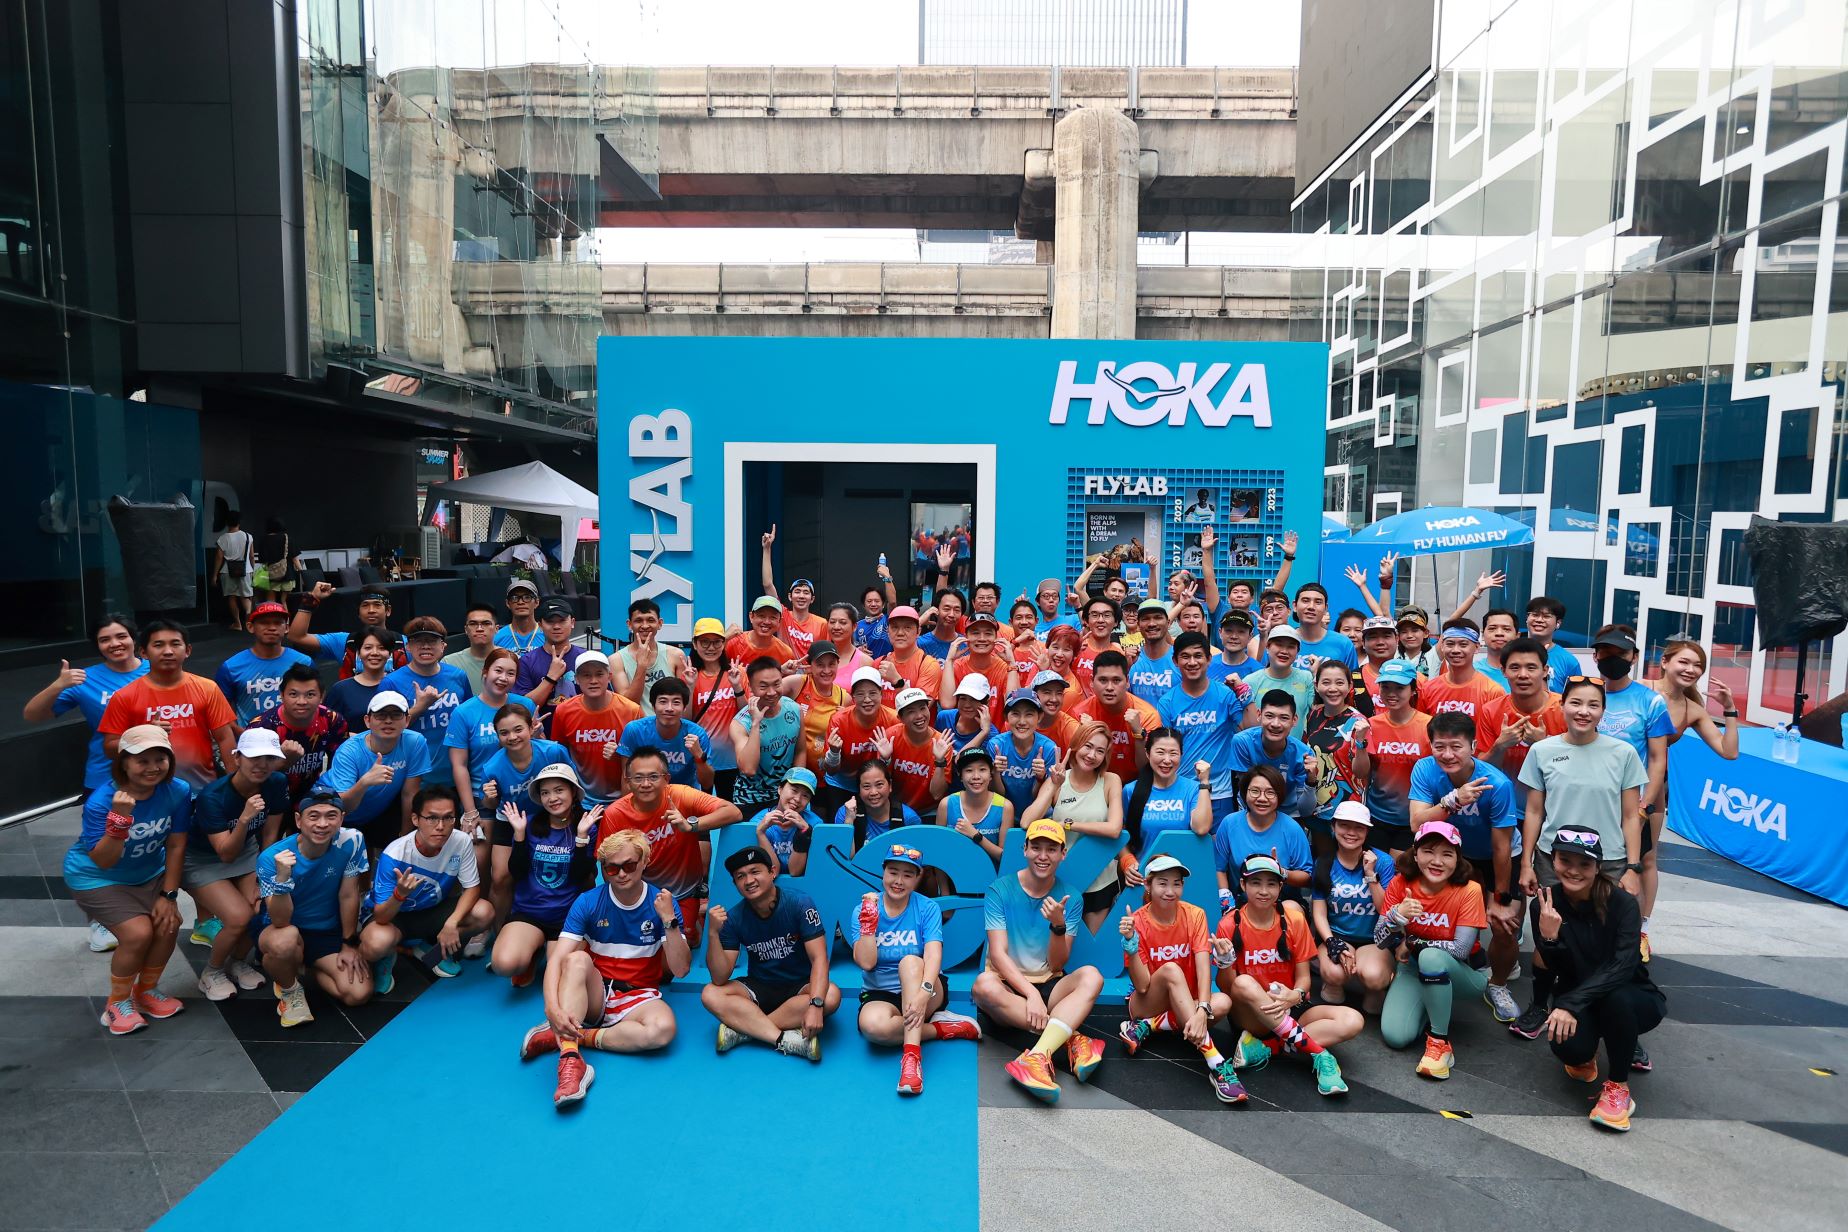 HOKA® ประเทศไทย เปิดประสบการณ์ ผ่านแคมเปญระดับโลก “HOKA FLYLAB” ครั้งแรก!